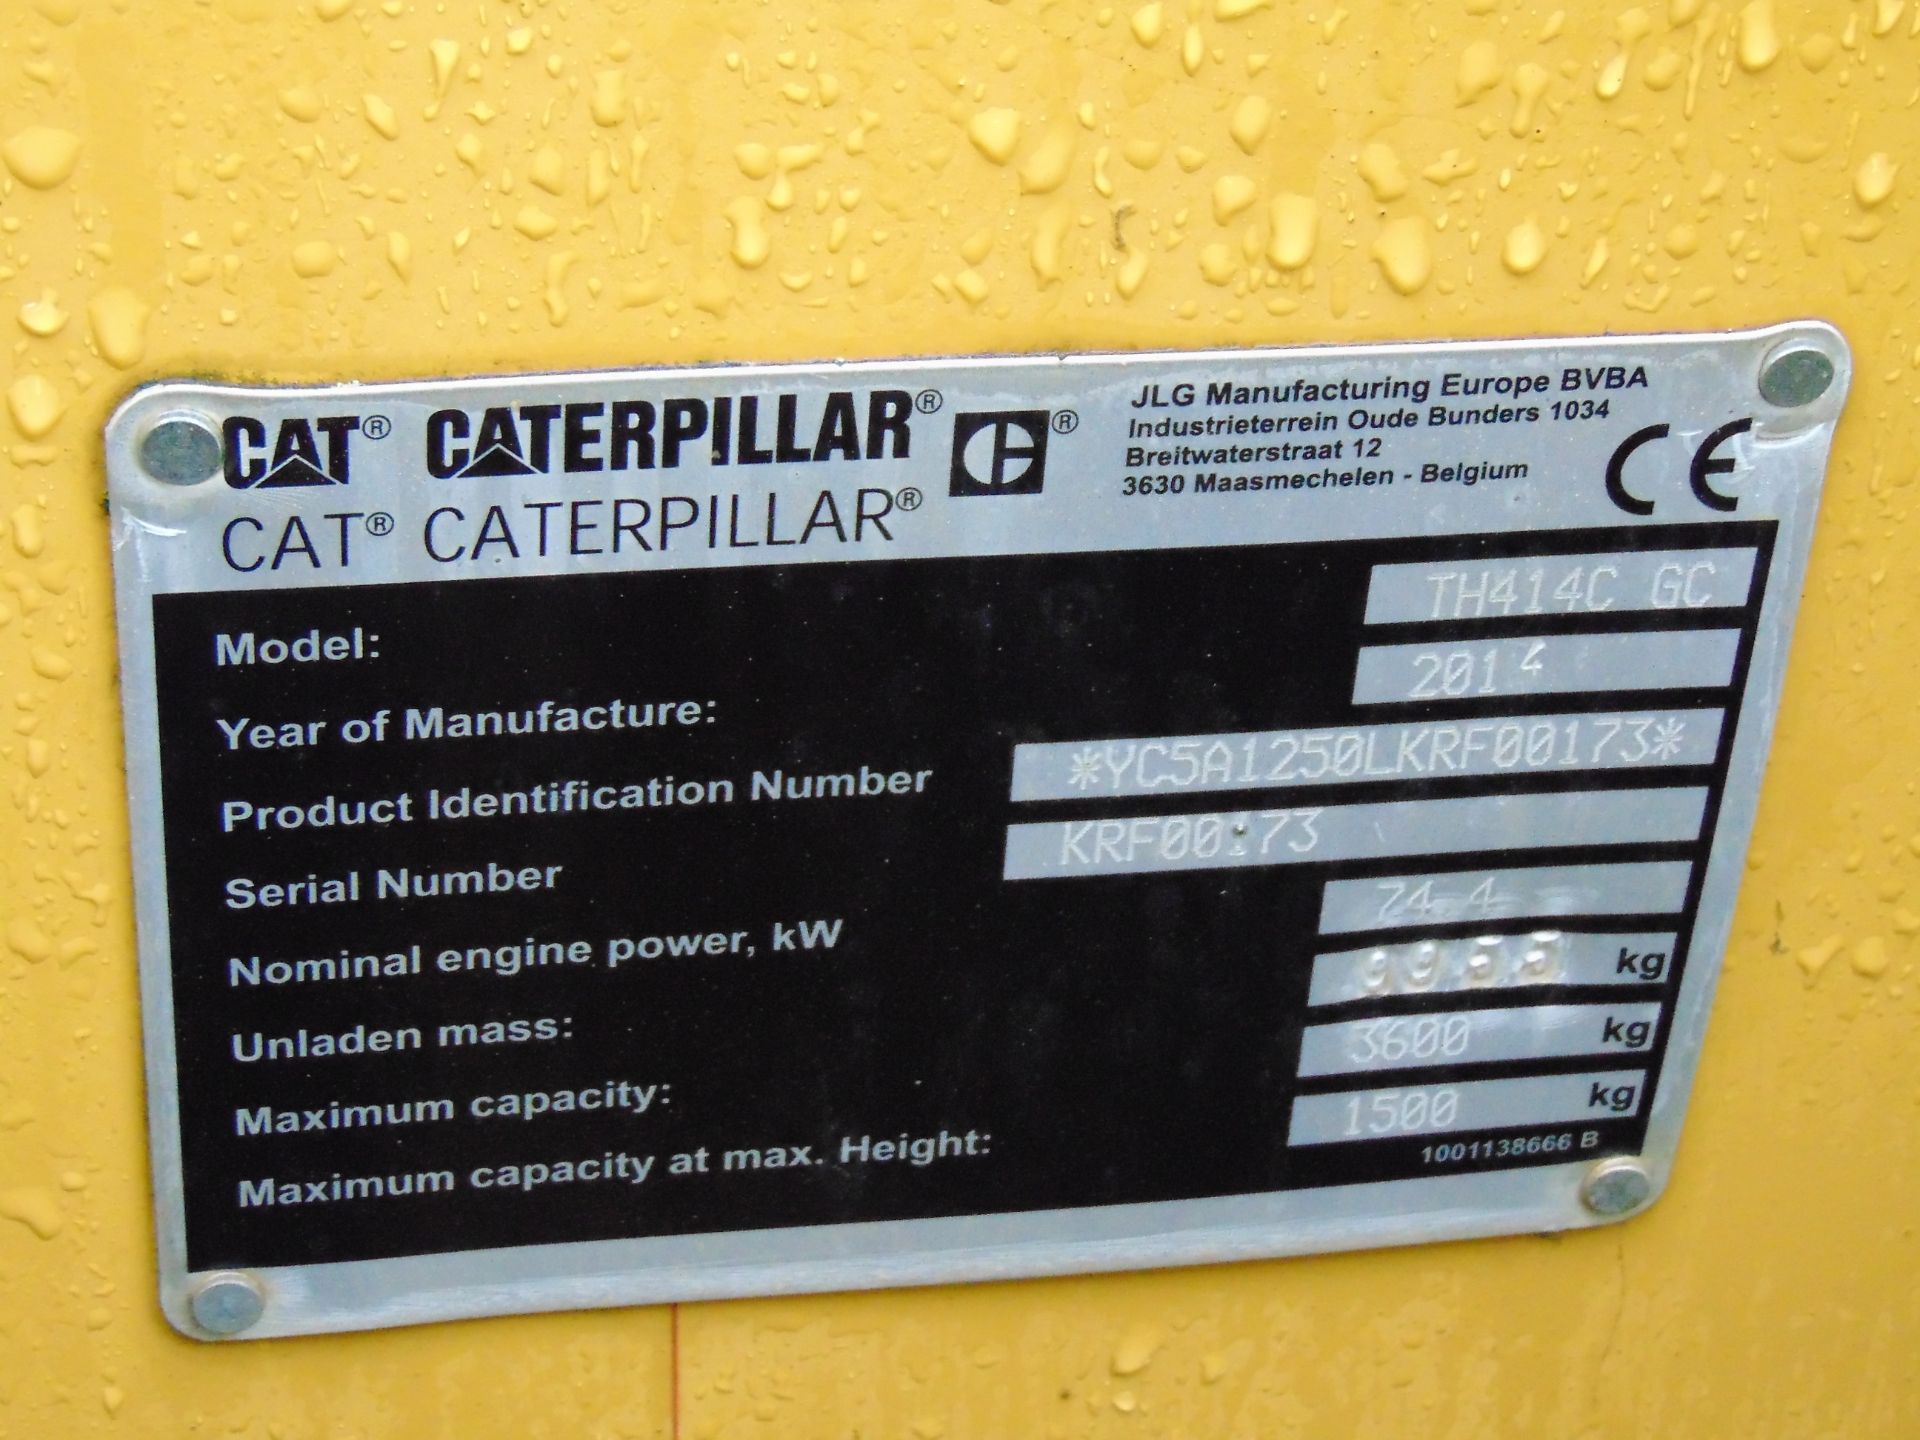 2014 Caterpillar TH414C GC 3.6 ton Telehandler ONLY 1,088 Hours! - Image 29 of 33